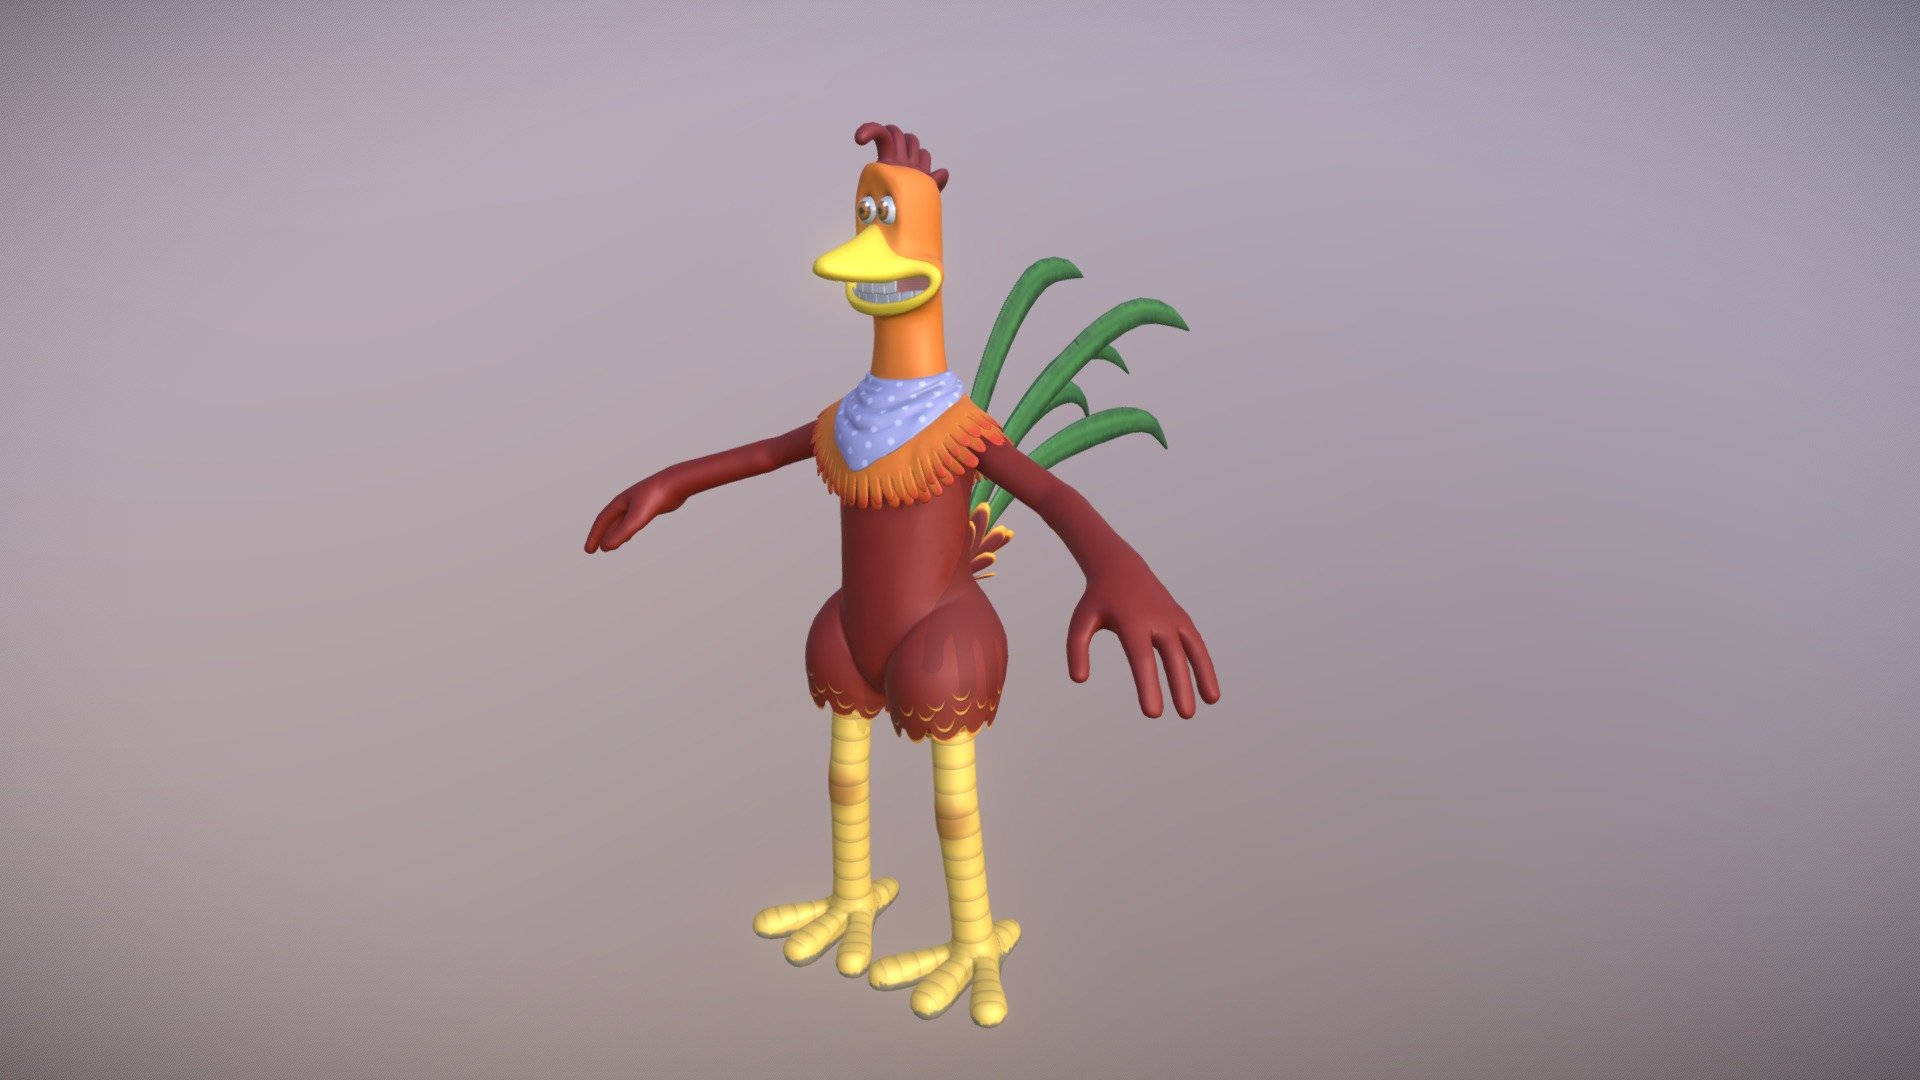 The Chicken Run Digital Art Wallpaper